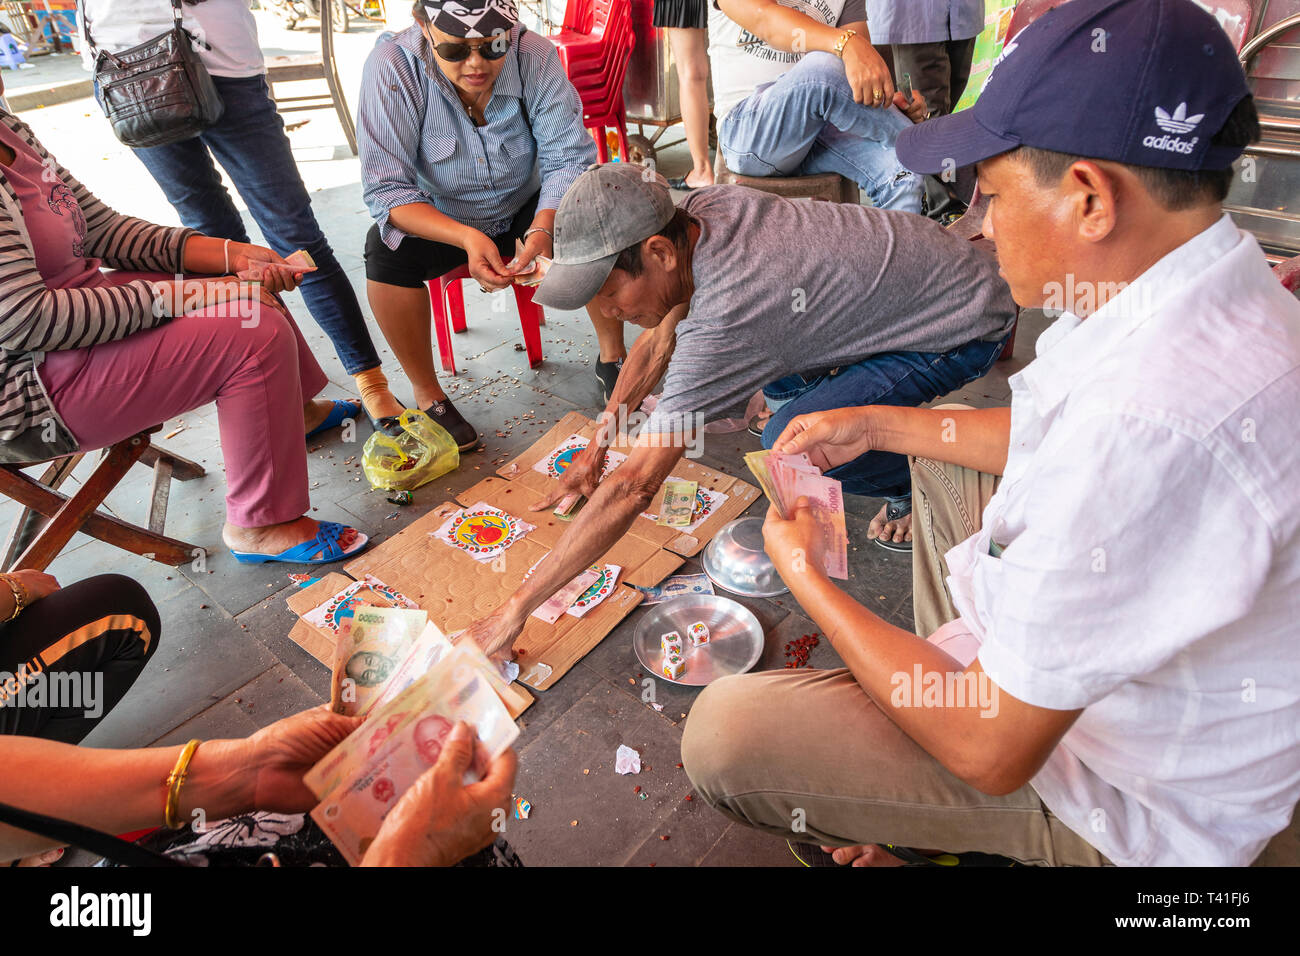 Street gambling den dado da gioco basato scommesse e una scheda casalinga, vicoli, quartiere vecchio, Hoi An, Quang Nam Provence, Vietnam Asia Foto Stock